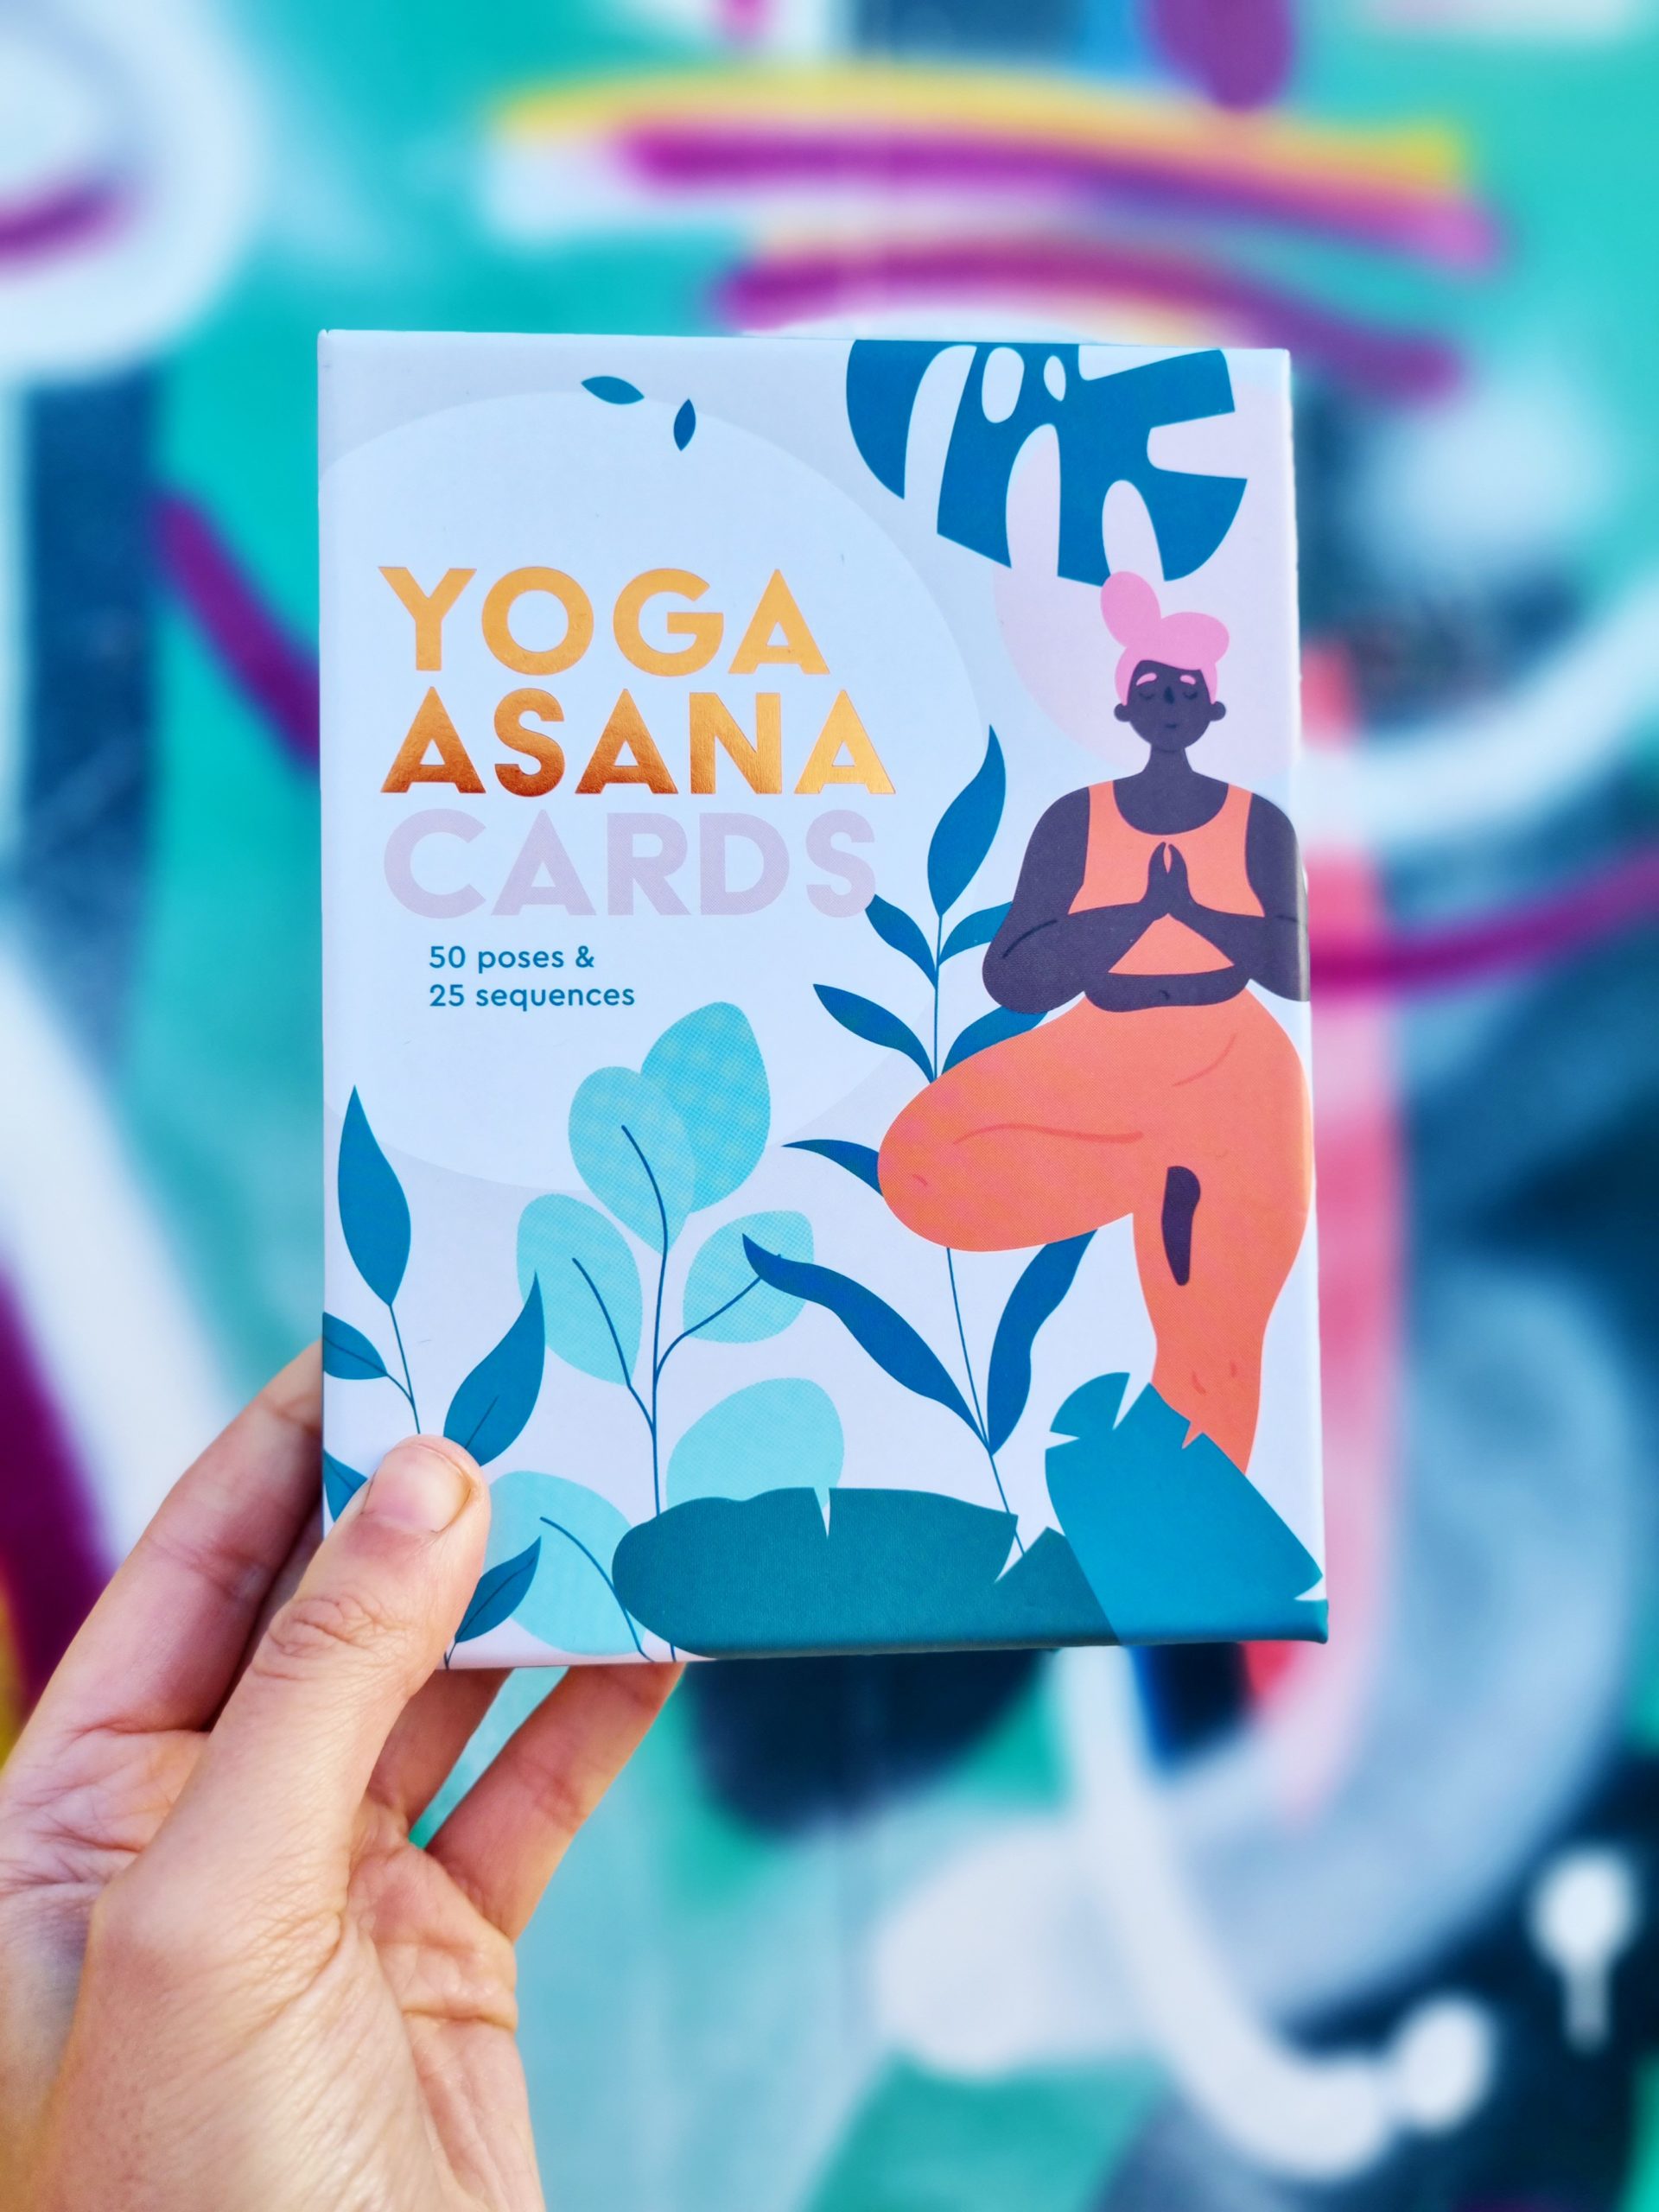 <img src="mindful.jpg" alt="mindful yoga asana poses cards"/> 